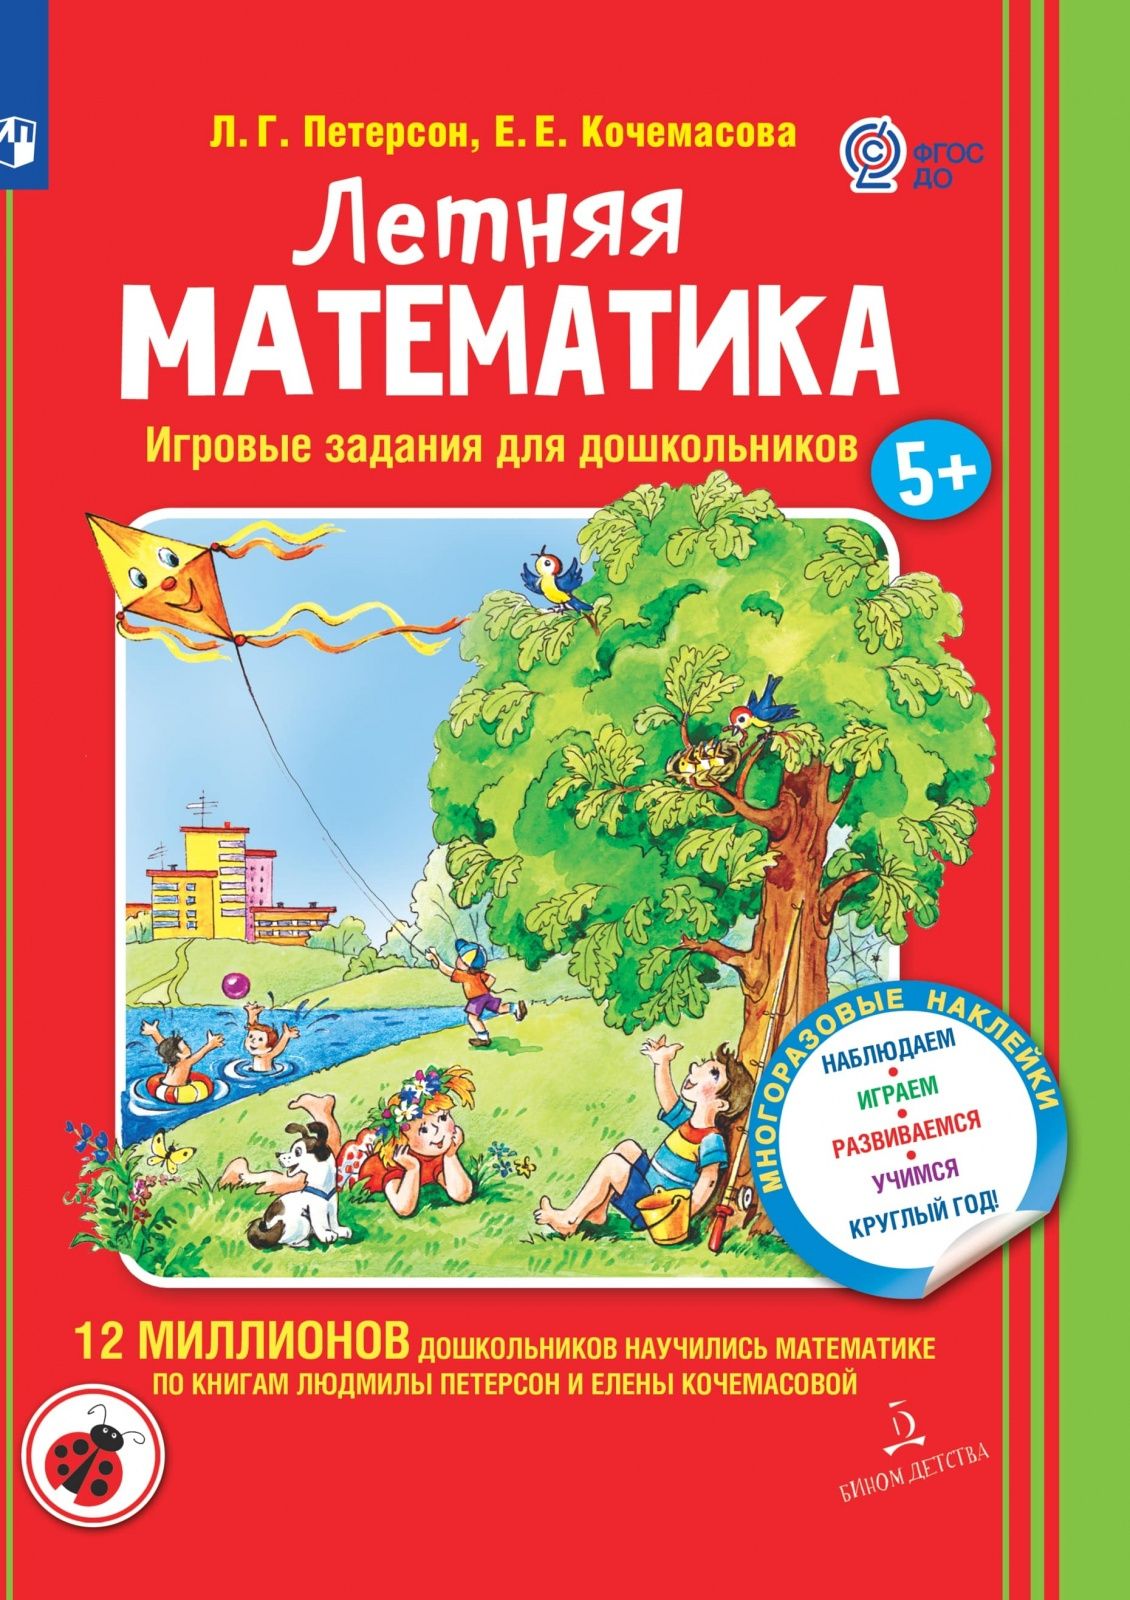 Математика летом. Тетради Кочемасова. Программа мир открытий Петерсон для дошкольников. Математика за лето.